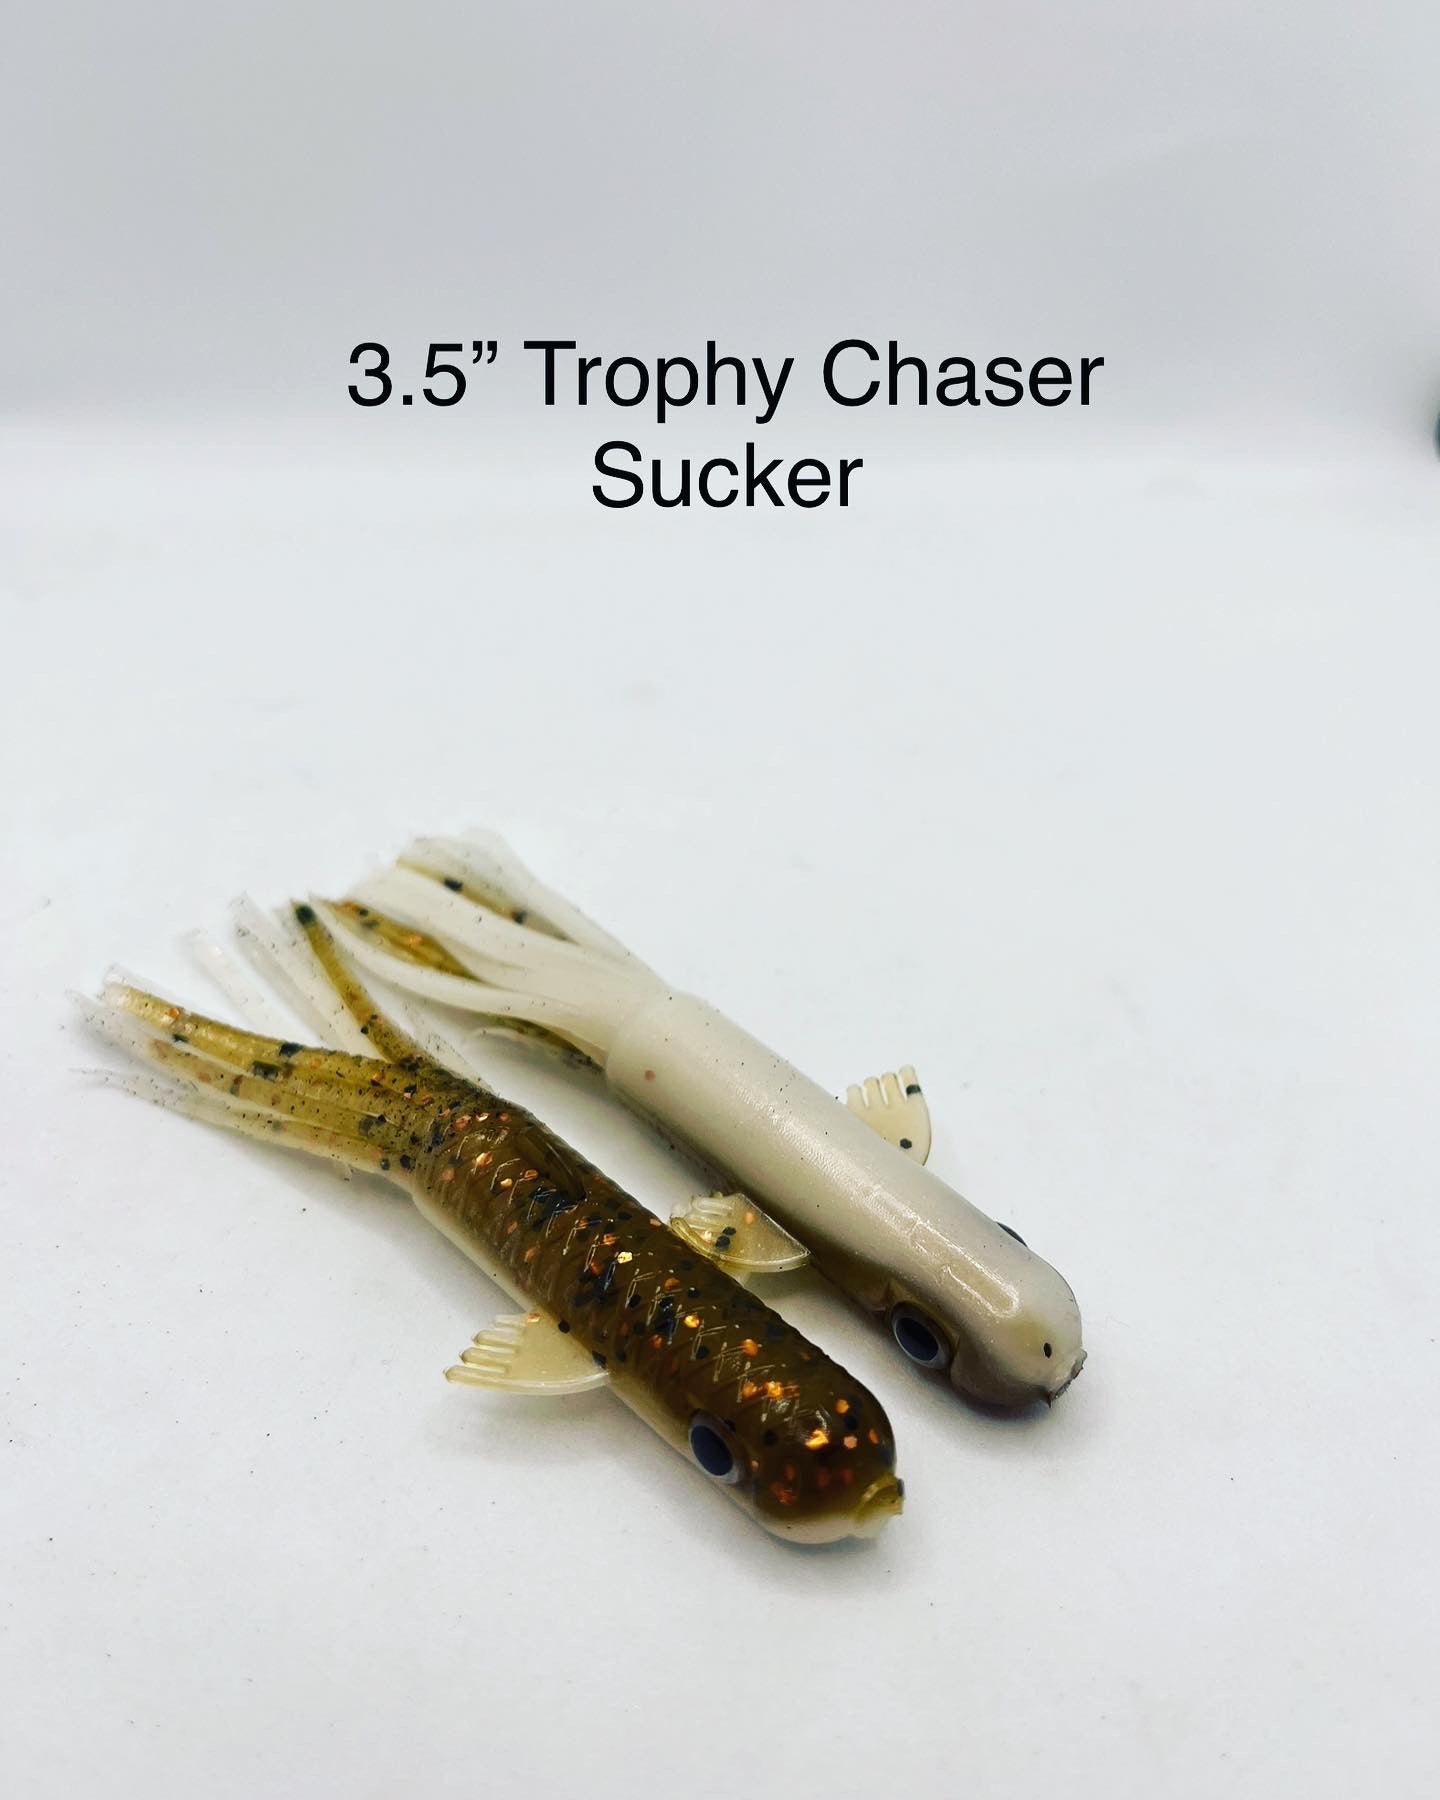 3.5" Trophy Chaser